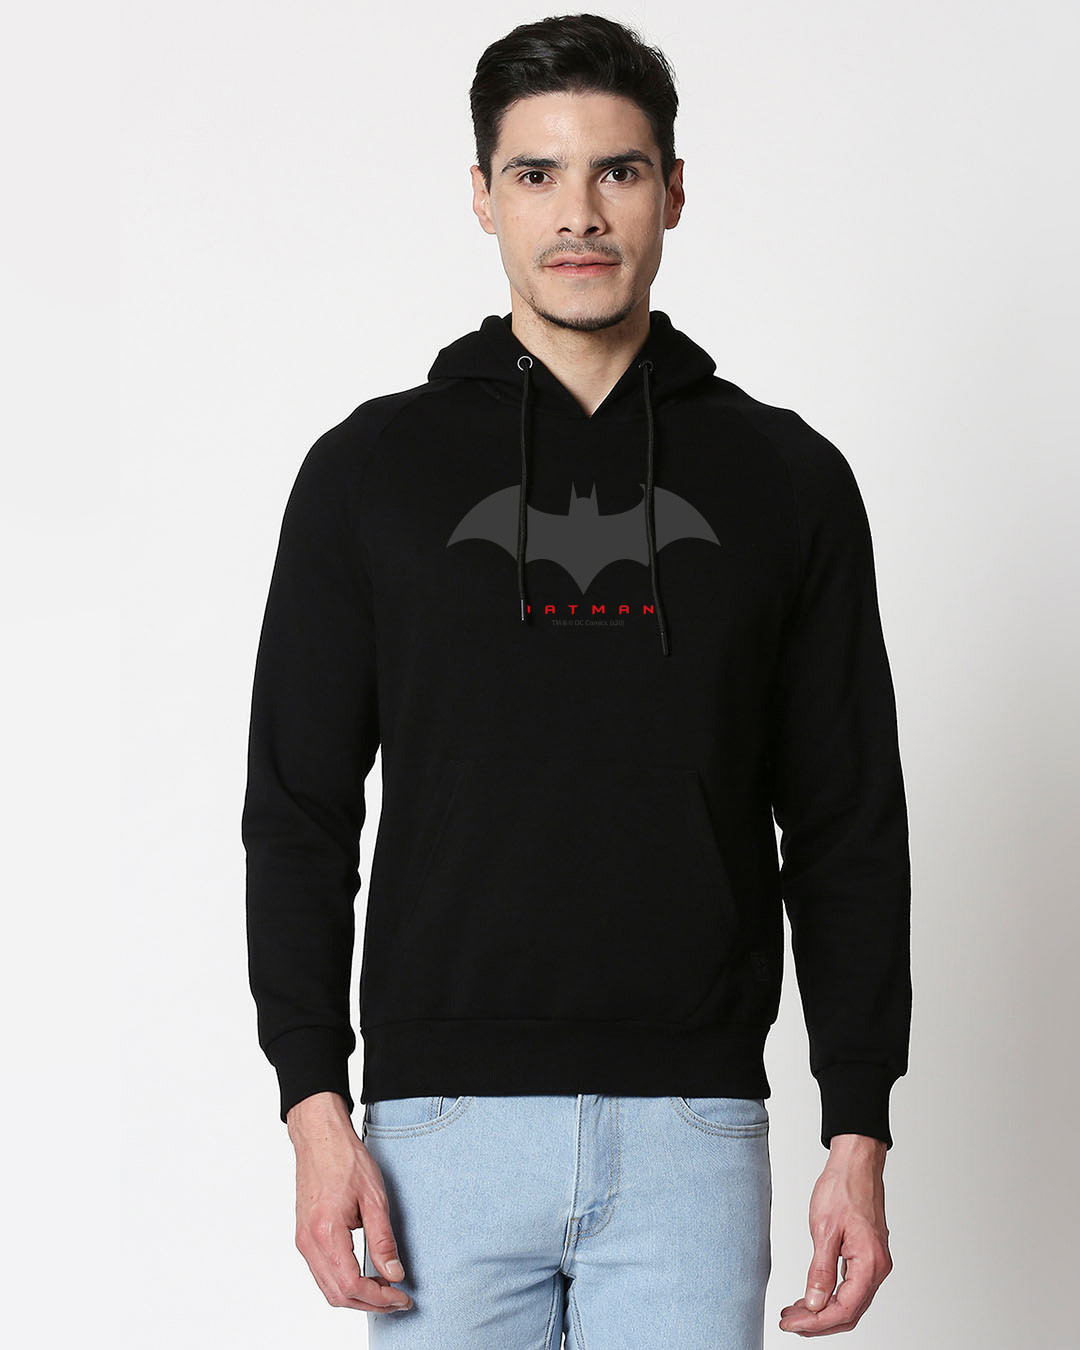 Buy Batman Outline Hoodie Sweatshirt for Men black Online at Bewakoof